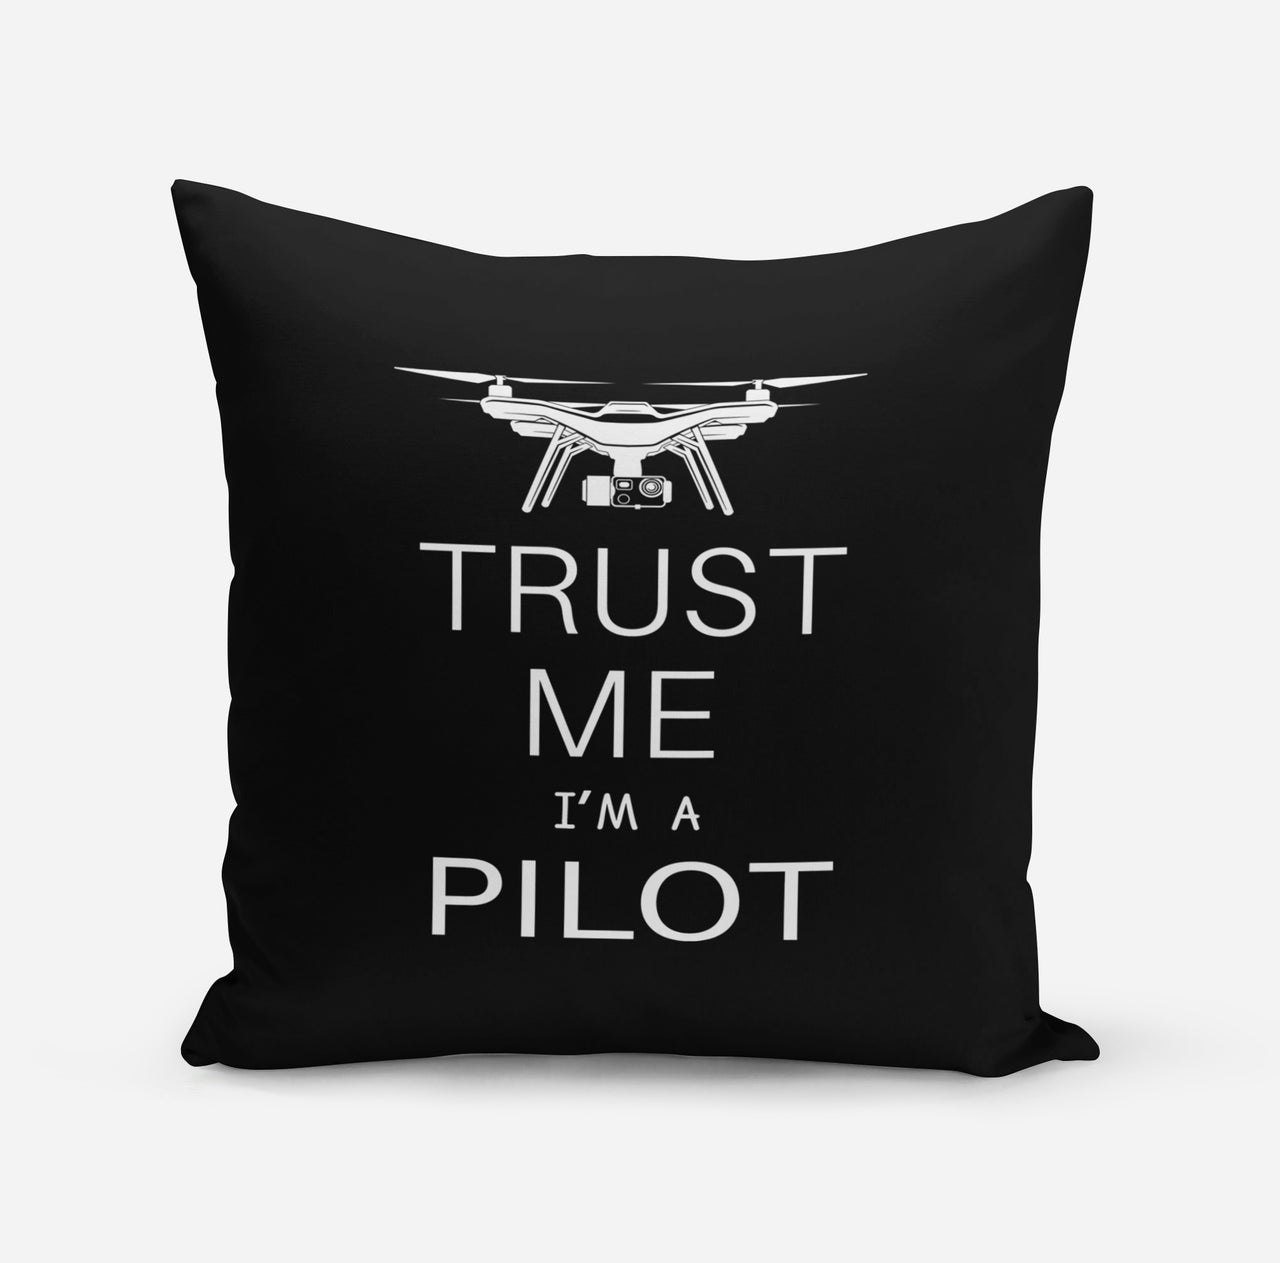 Trust Me I'm a Pilot (Drone) Designed Pillows